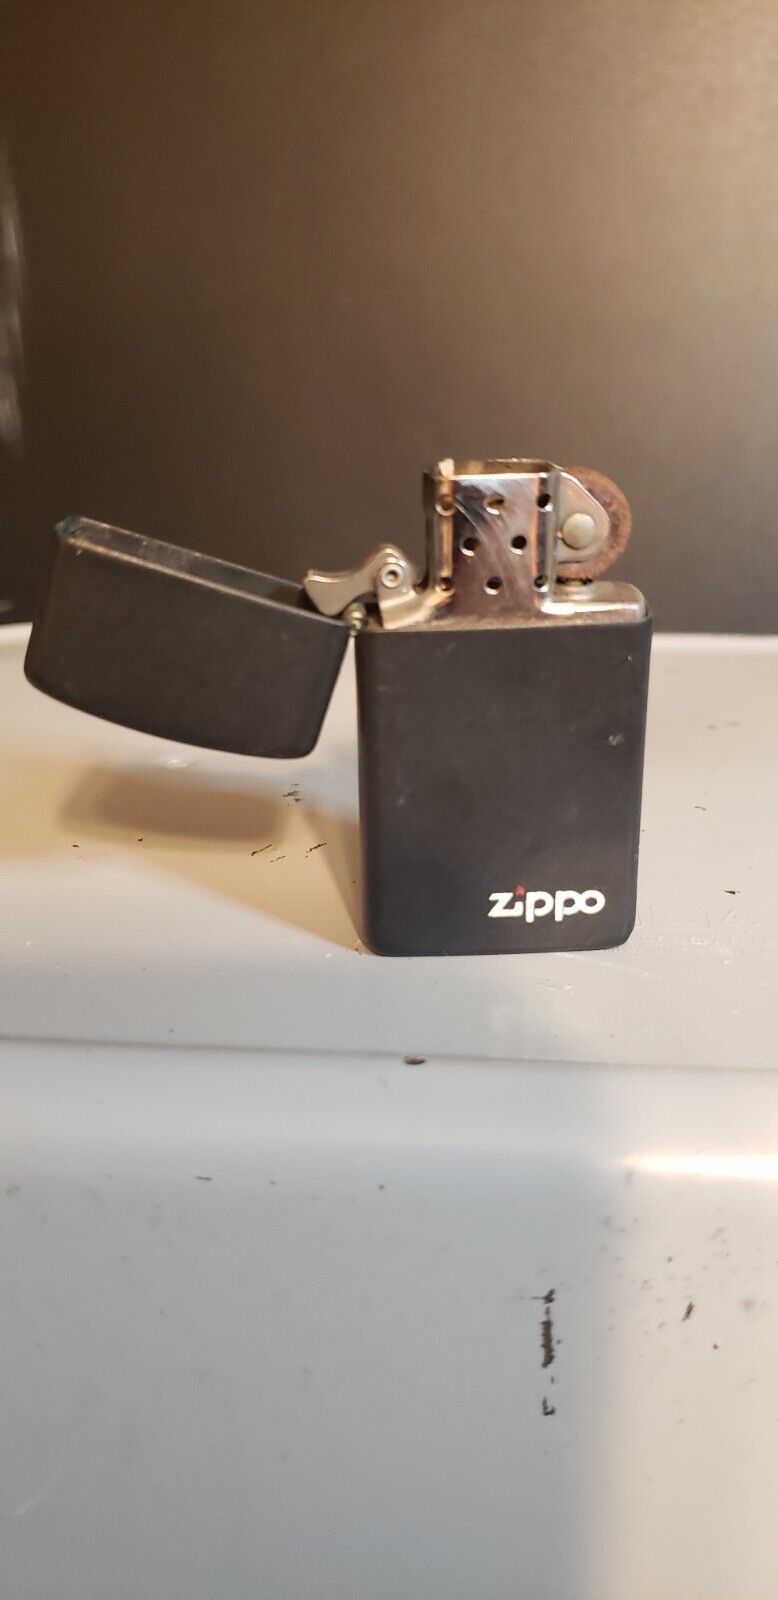 Zippo Lighter, a real classic beauty - Black Matte